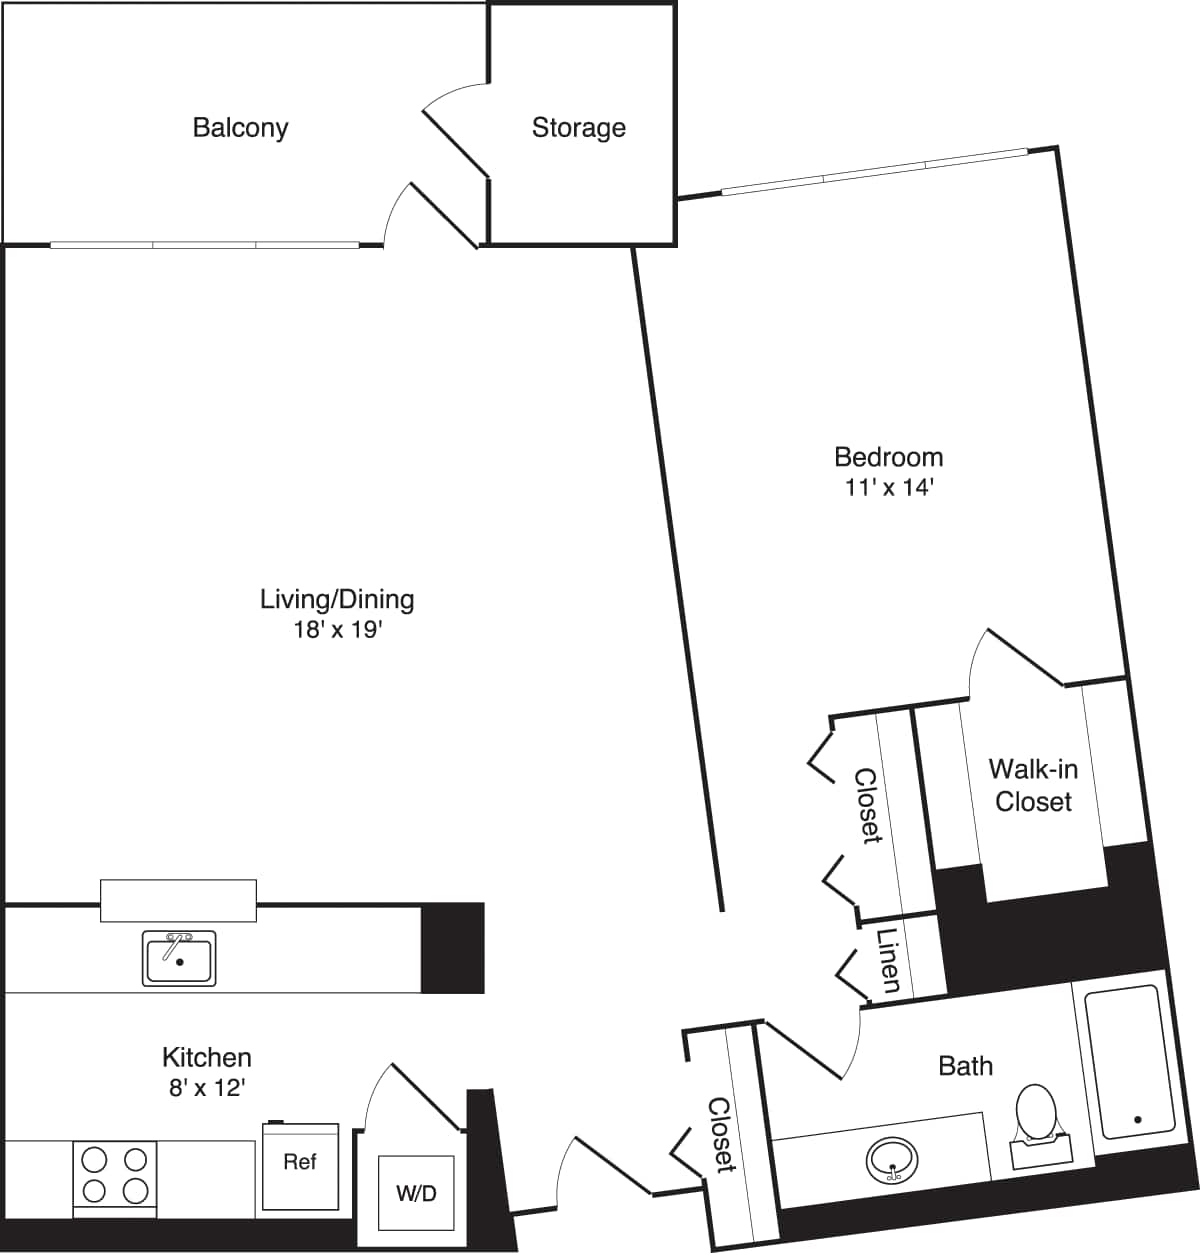 Floorplan diagram for 1 Bedroom M 27th Stack, showing 1 bedroom